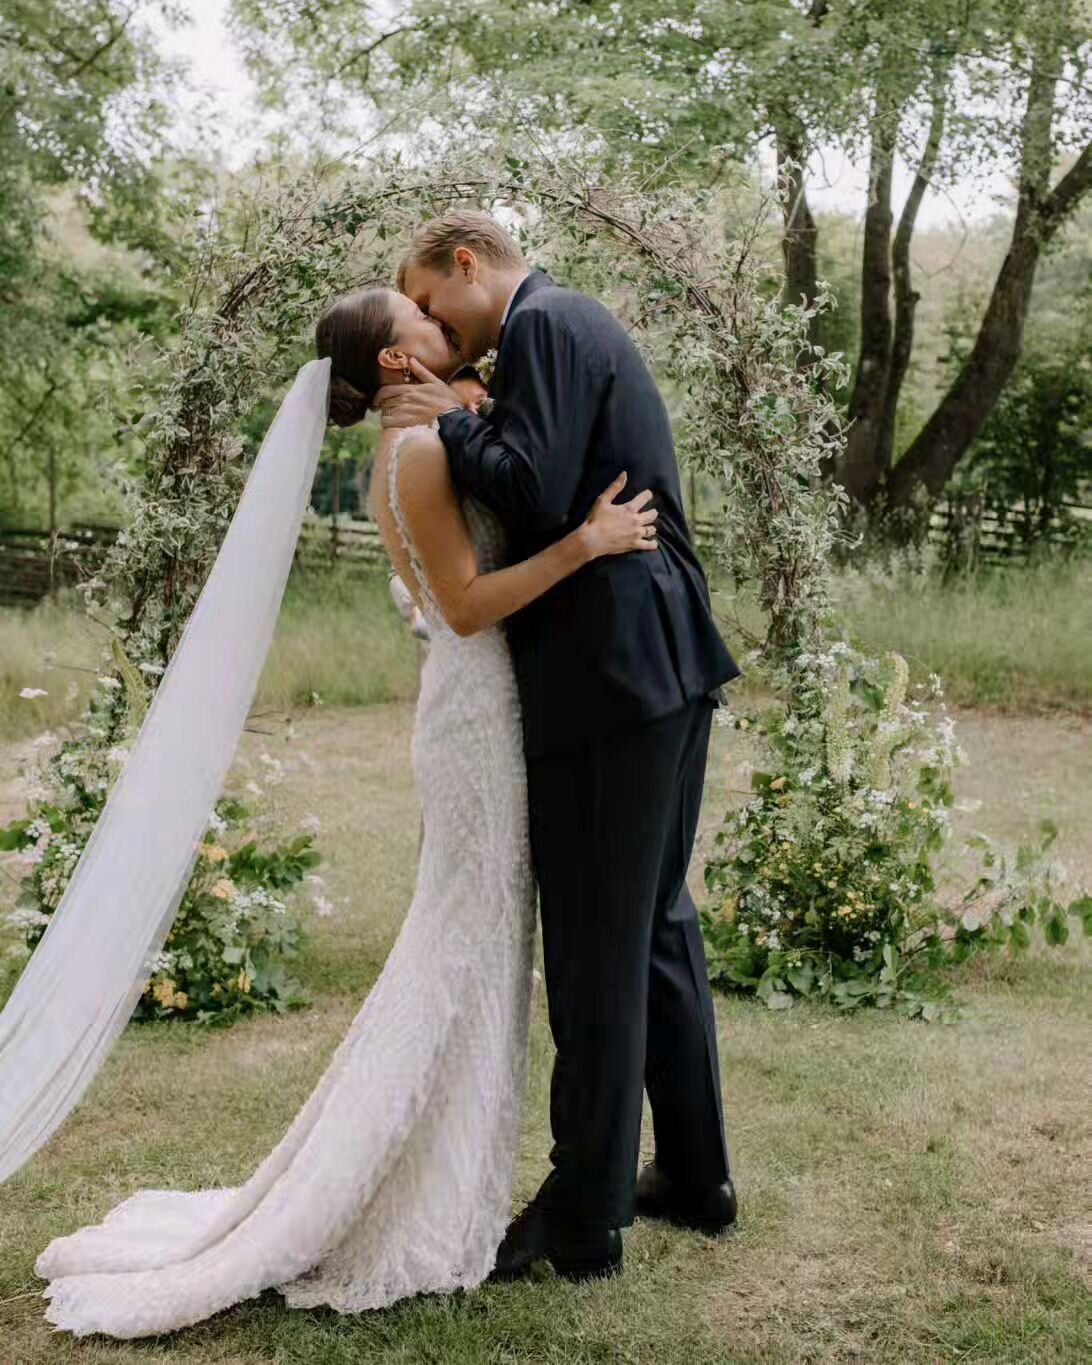 You may now kiss the bride! 💖

📸 @elkevdende
🌾@gouteva 
📋 @wahlman.weddings